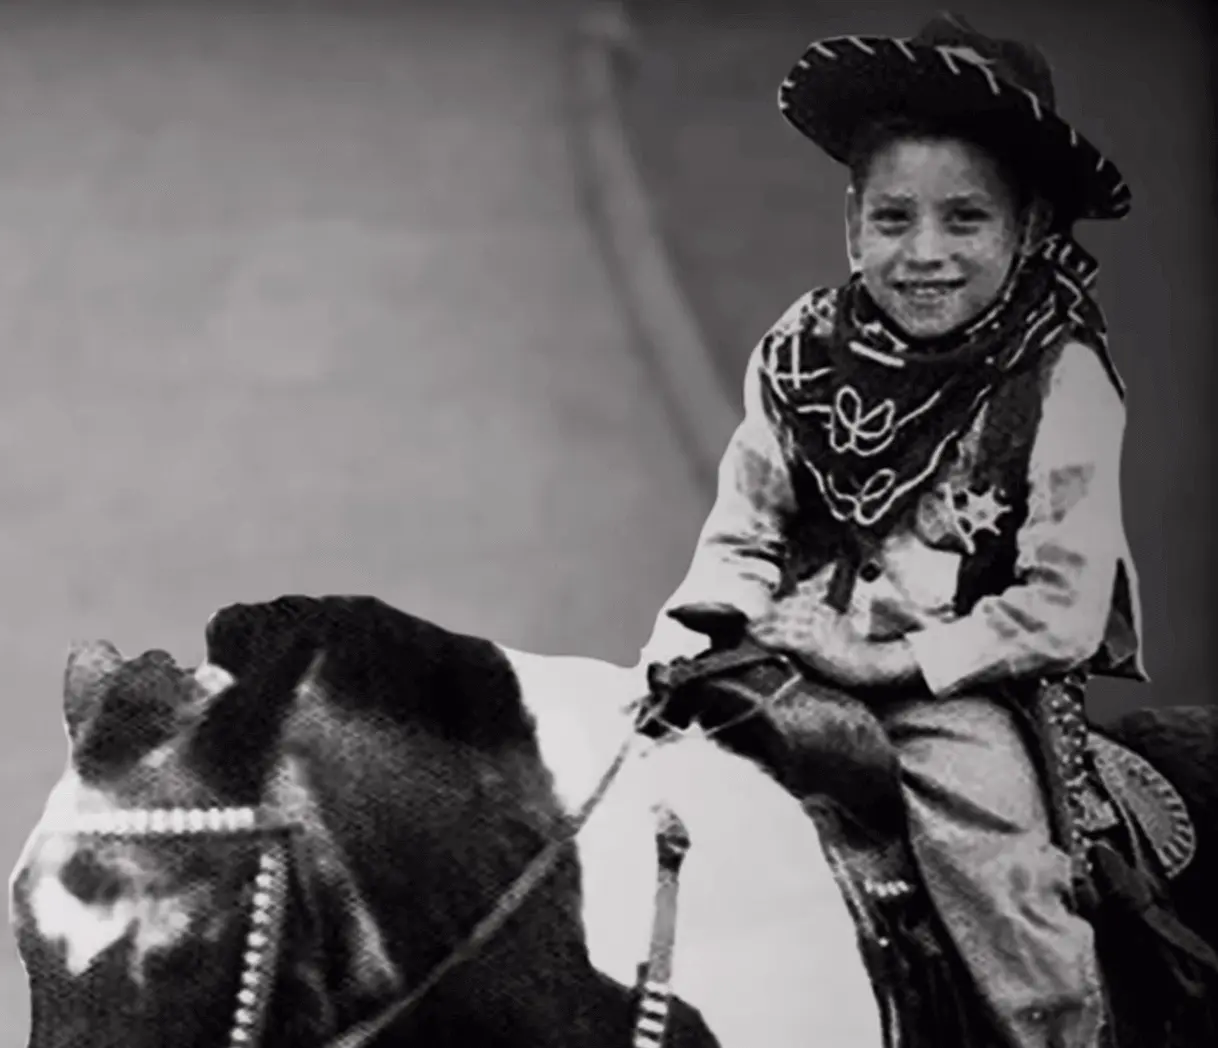 Danny Trejo as a child riding a horse.